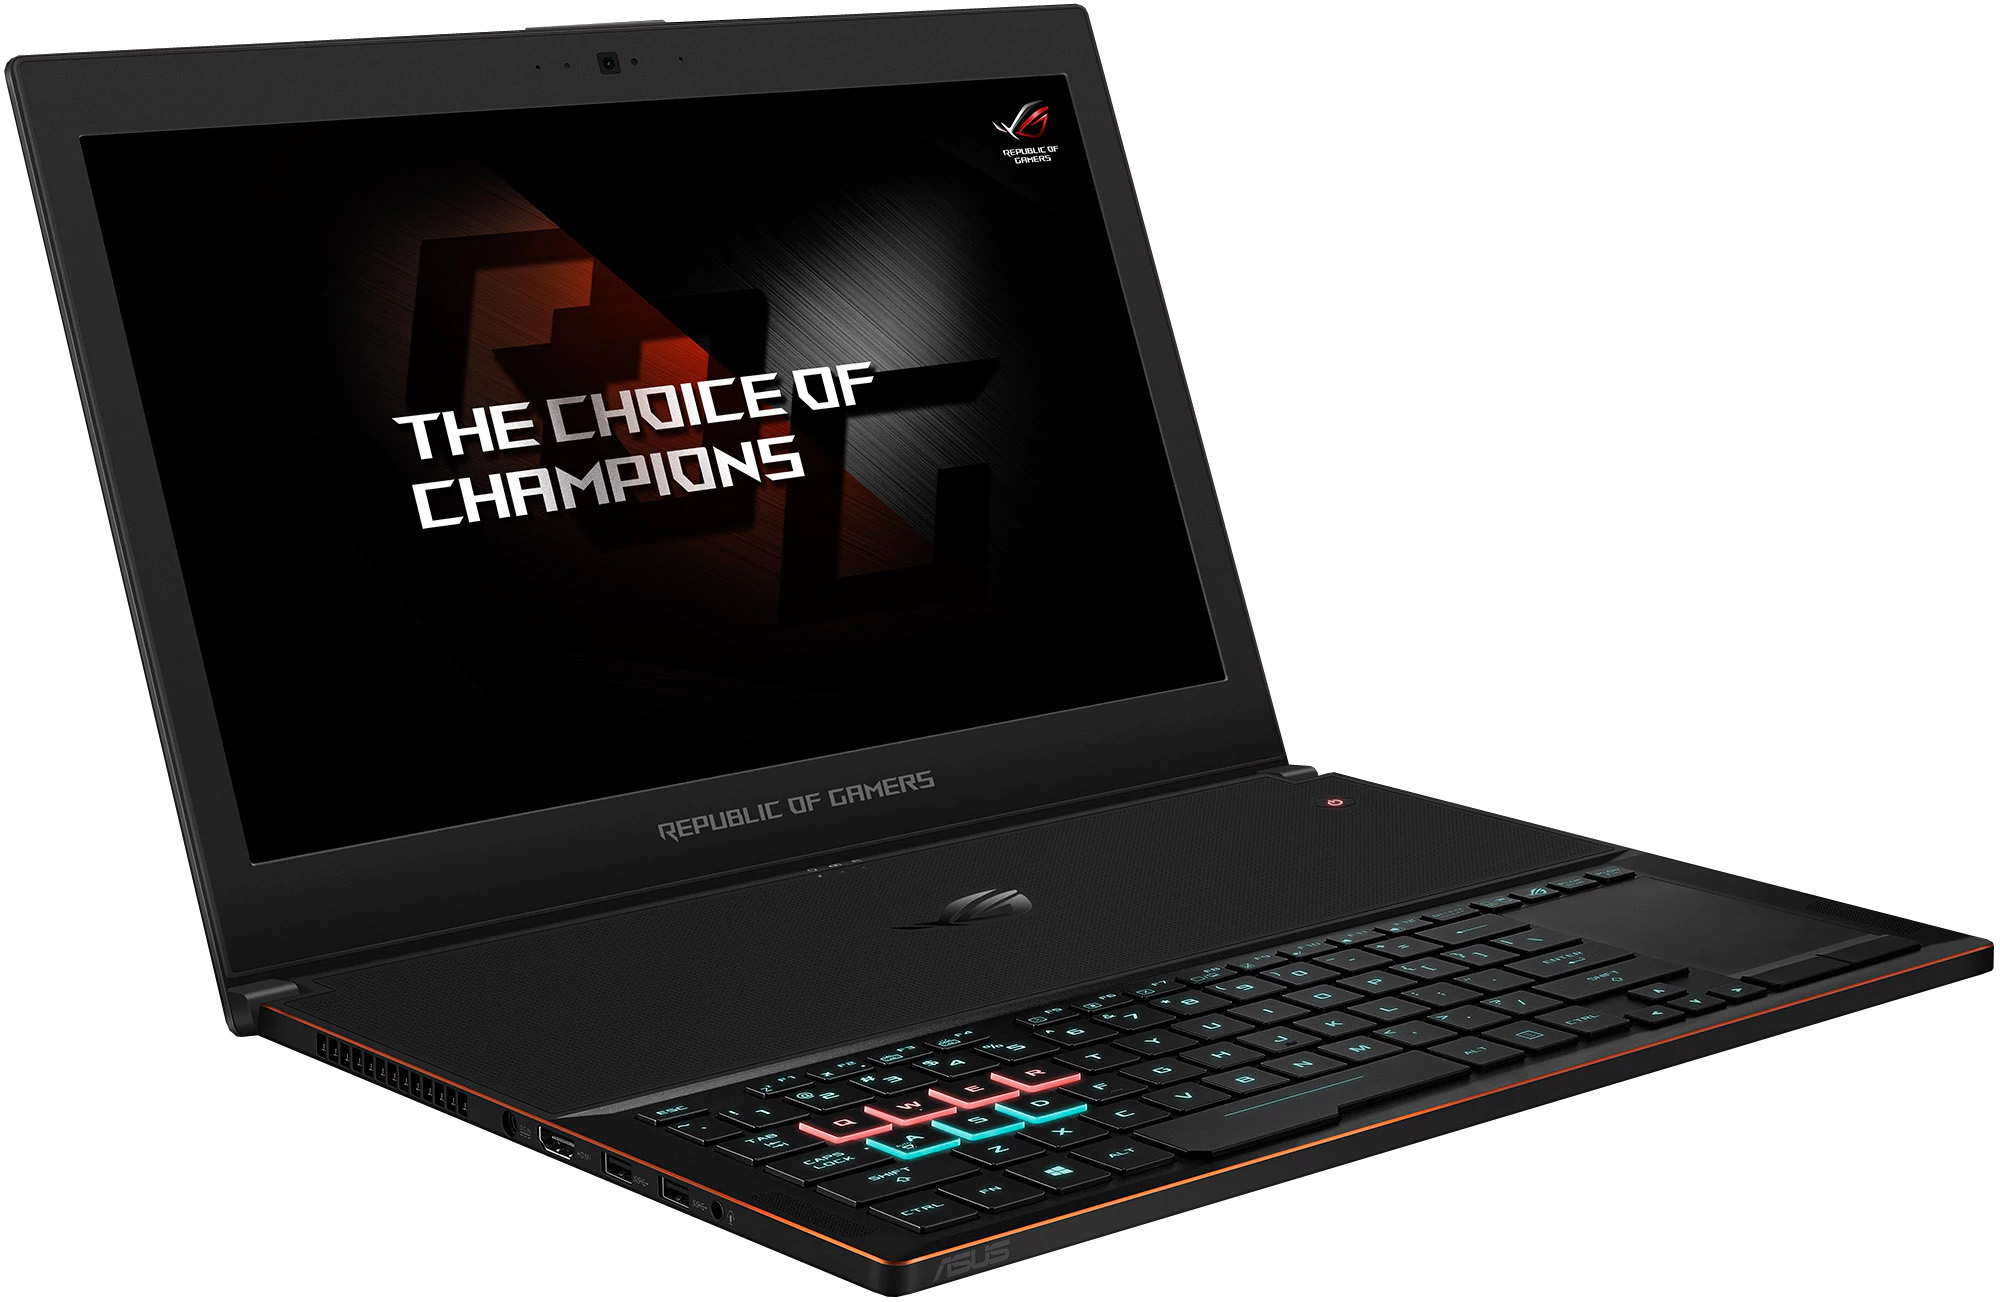 Asus ROG Zephyrus GX501 Laptop Review - NotebookCheck.net Reviews